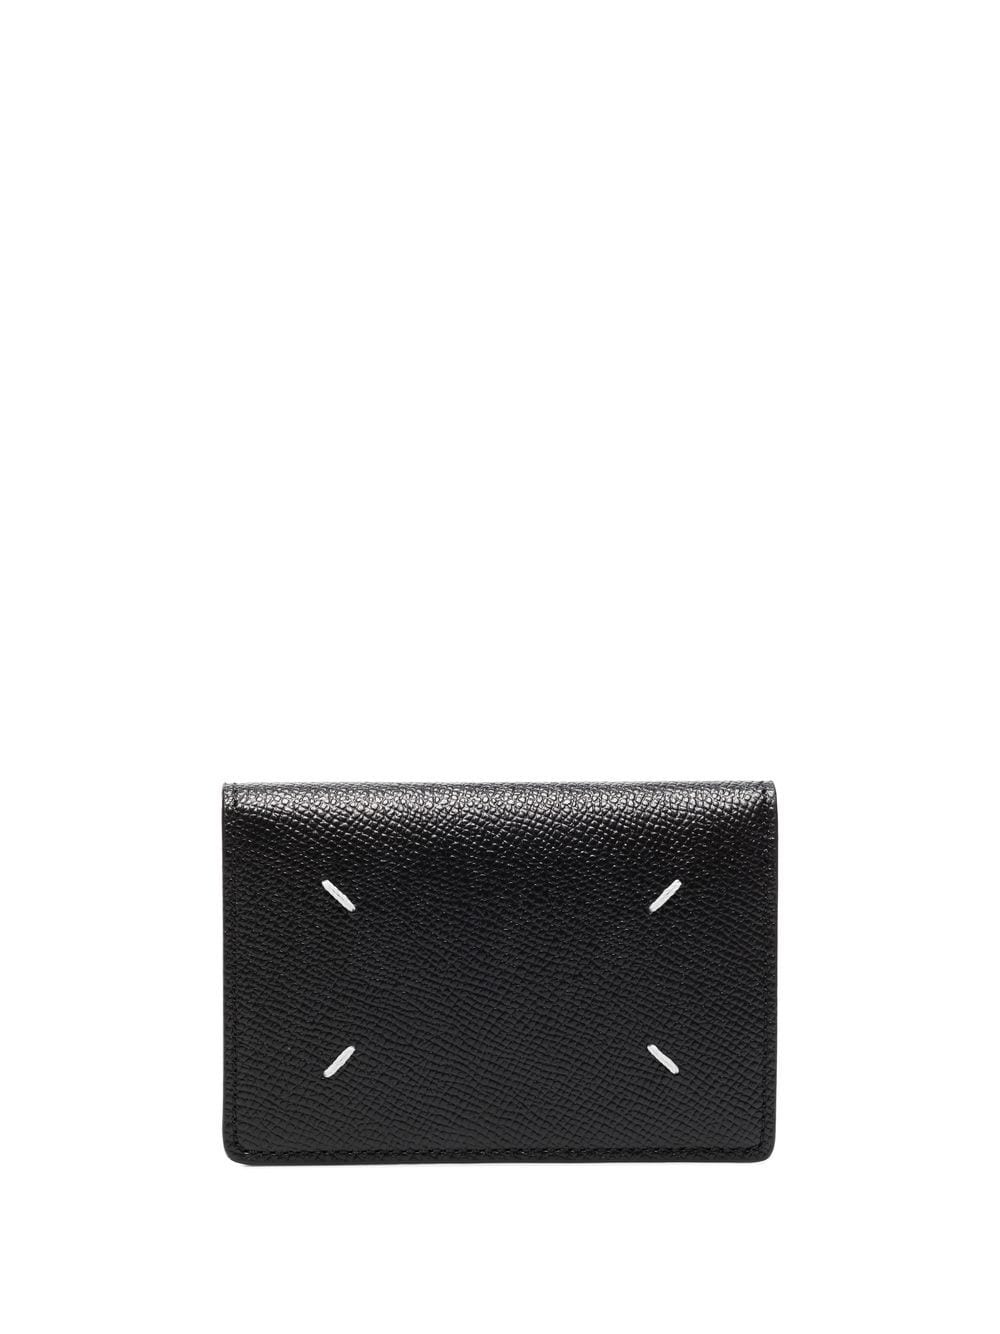 Maison Margiela four-stitch logo leather cardholder - Black von Maison Margiela